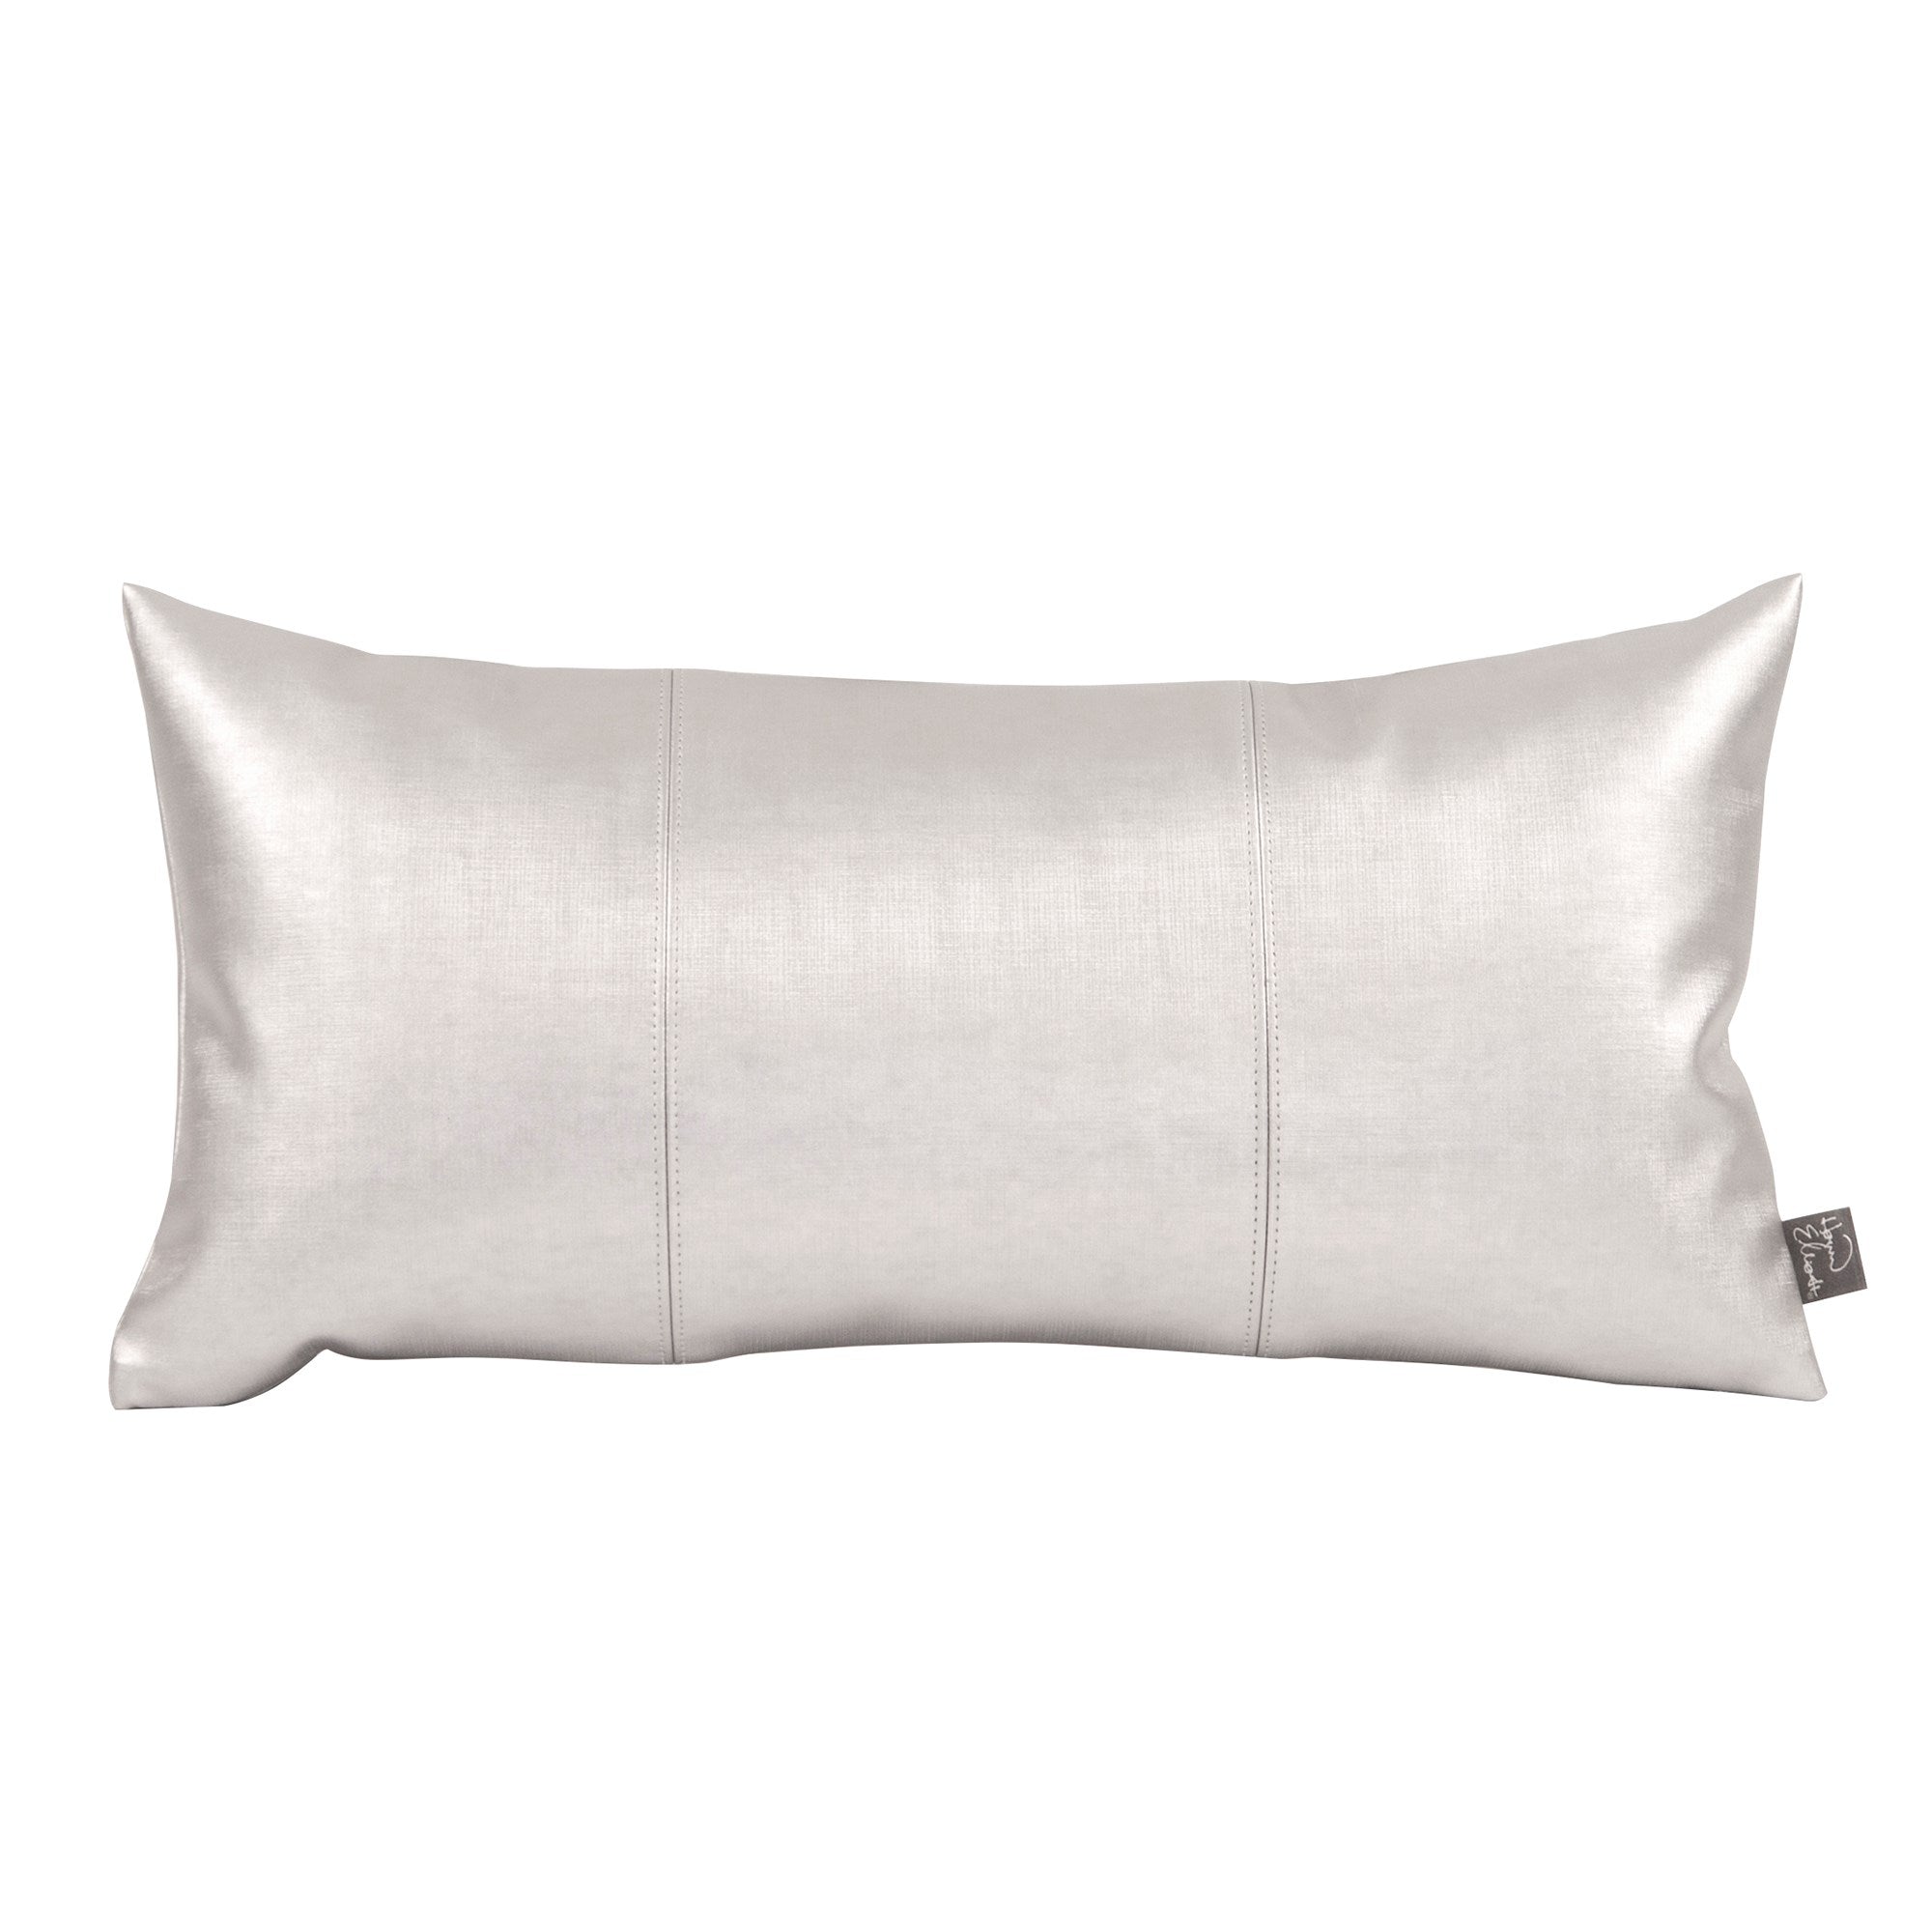 Luxe Mercury Kidney Pillow- 11" x 22"